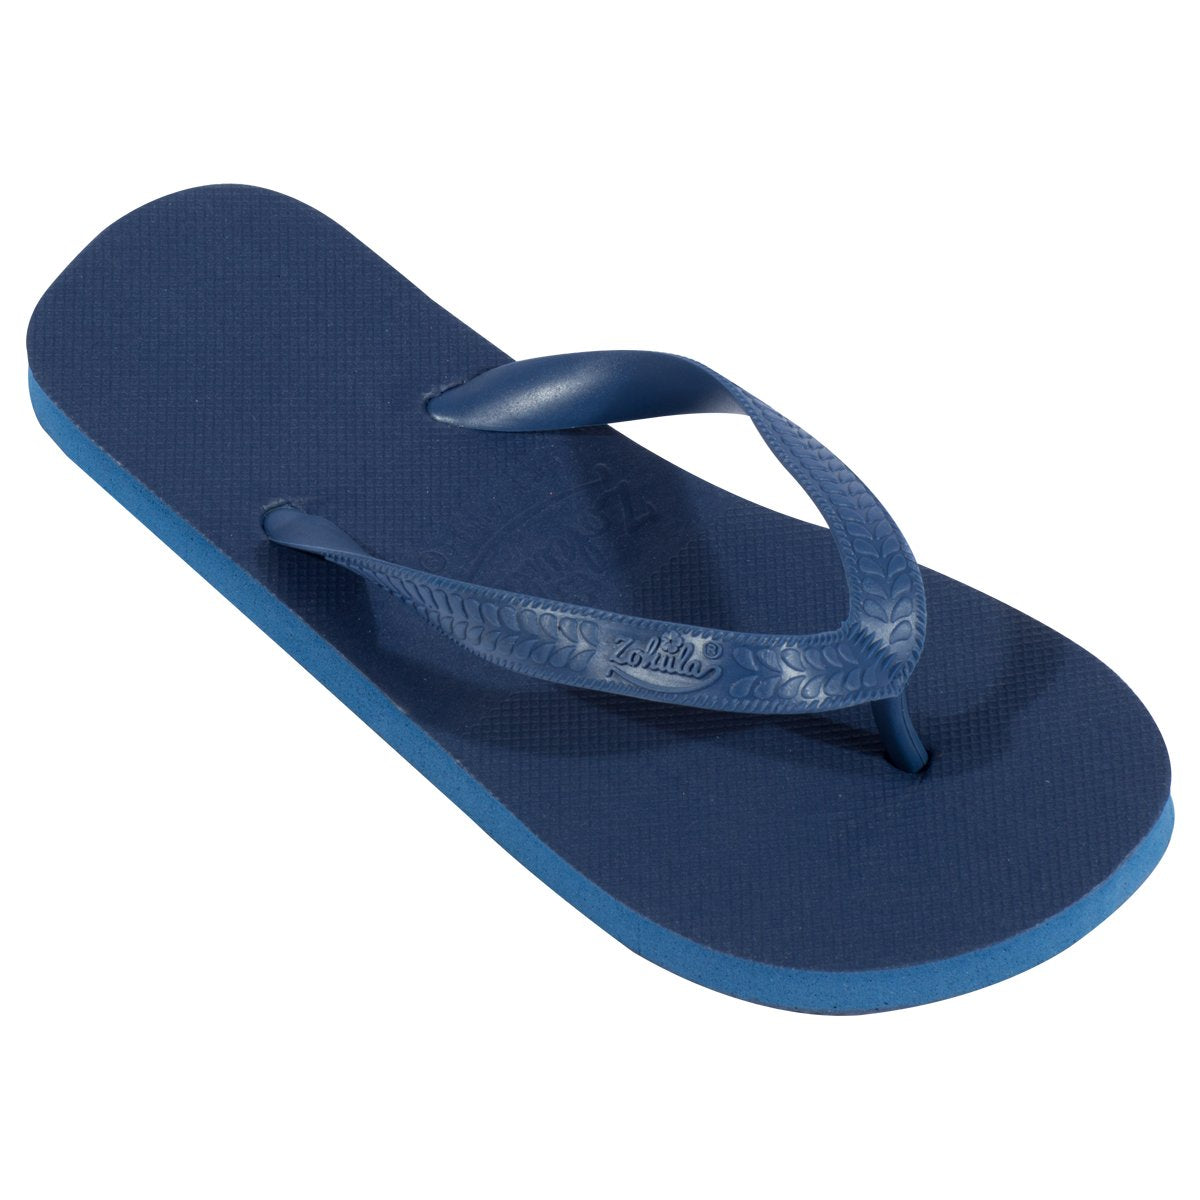 Zohula Originals Navy Blue Flip Flops - Bulk Buy - 10-100 Pairs